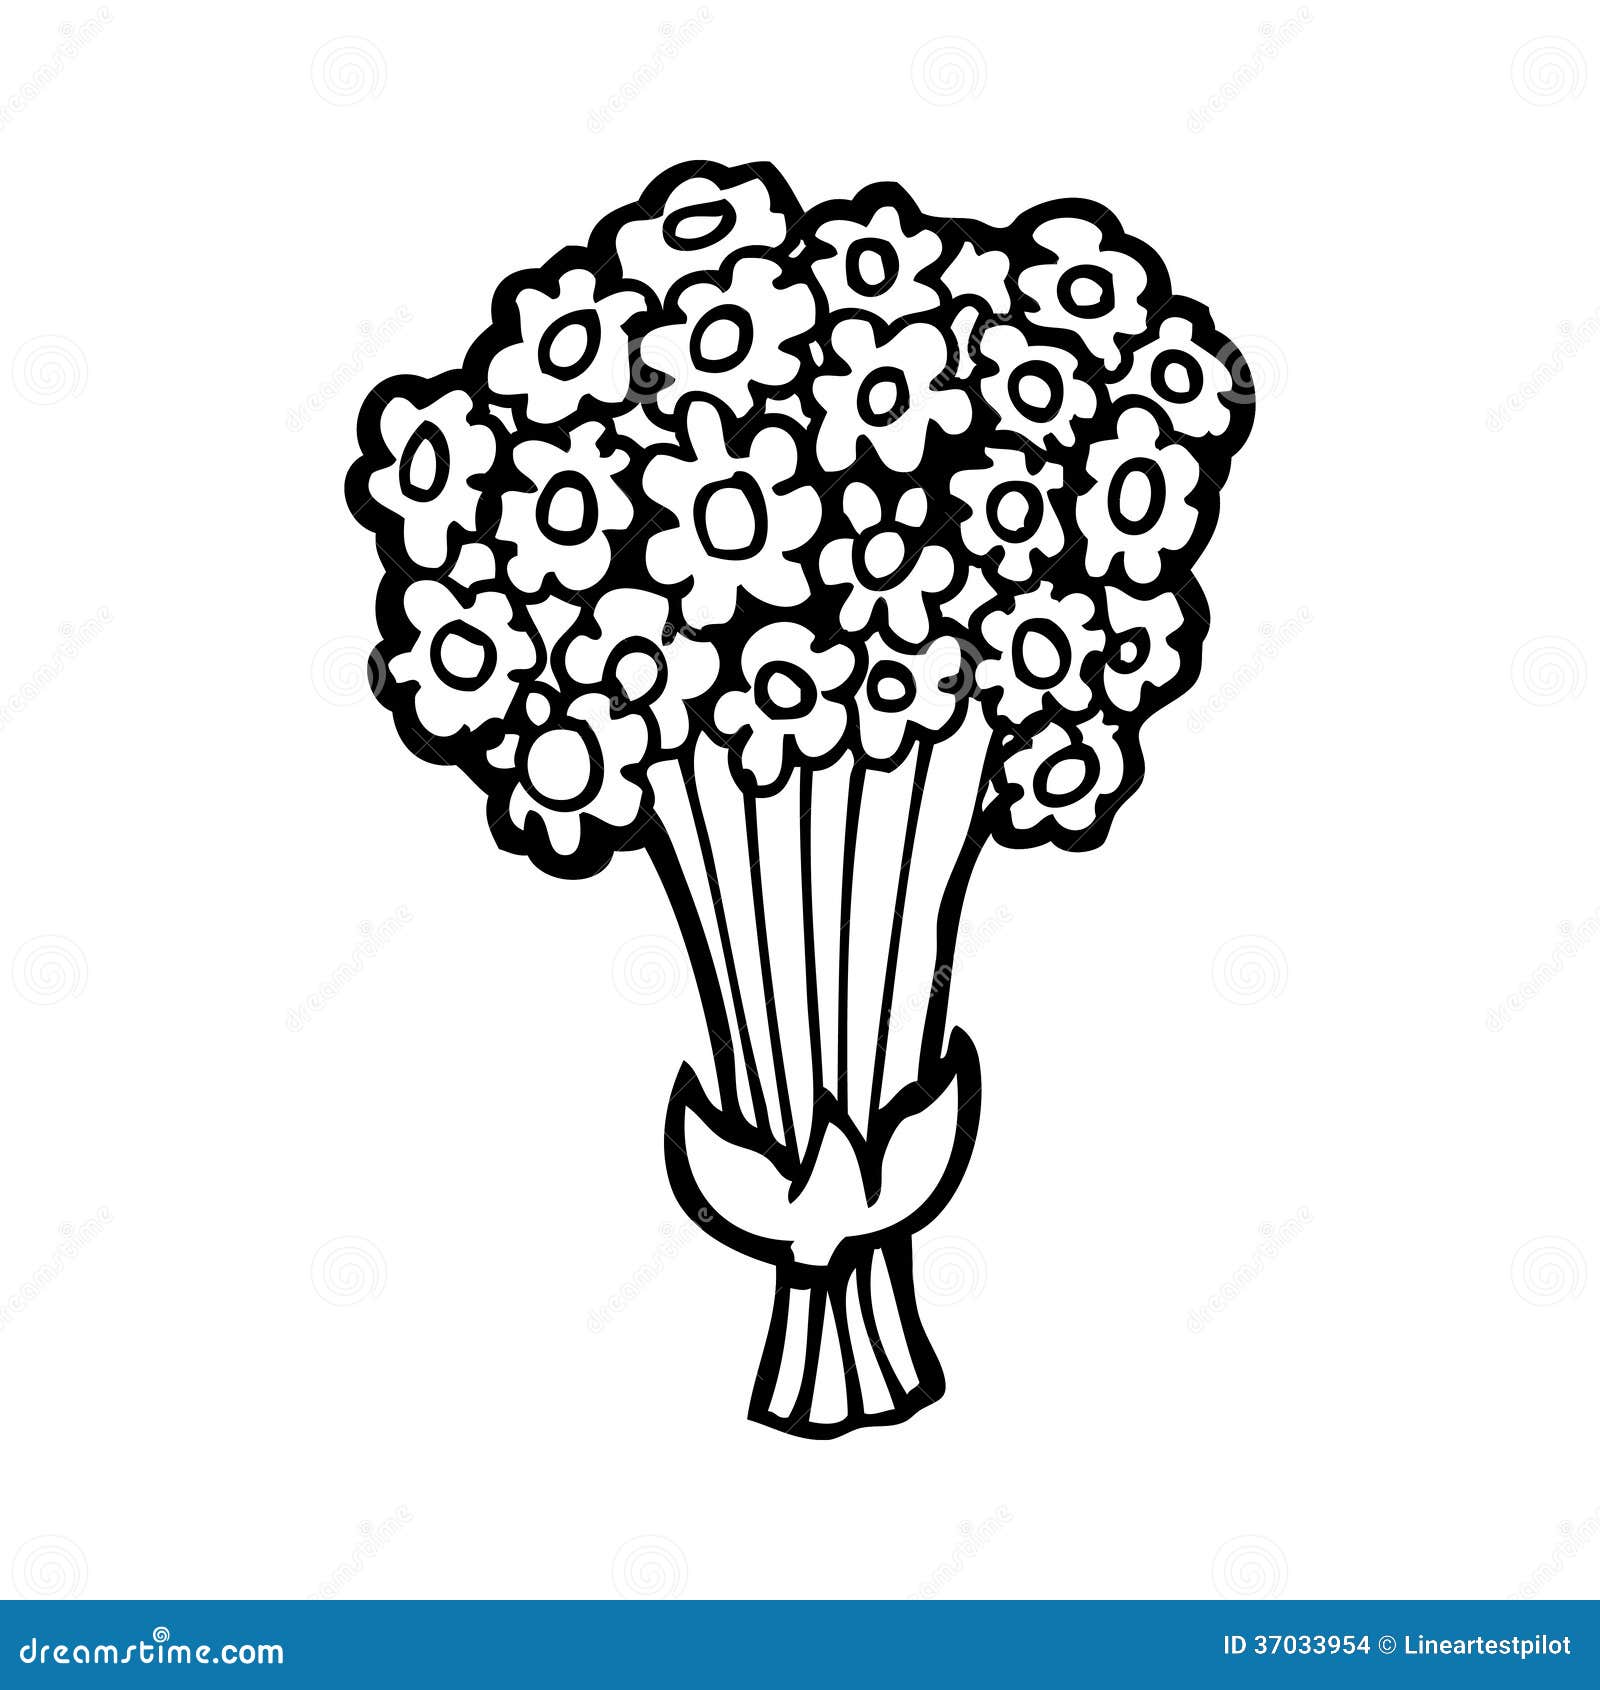 Cartoon Flowers Stock Images - Image: 37033954